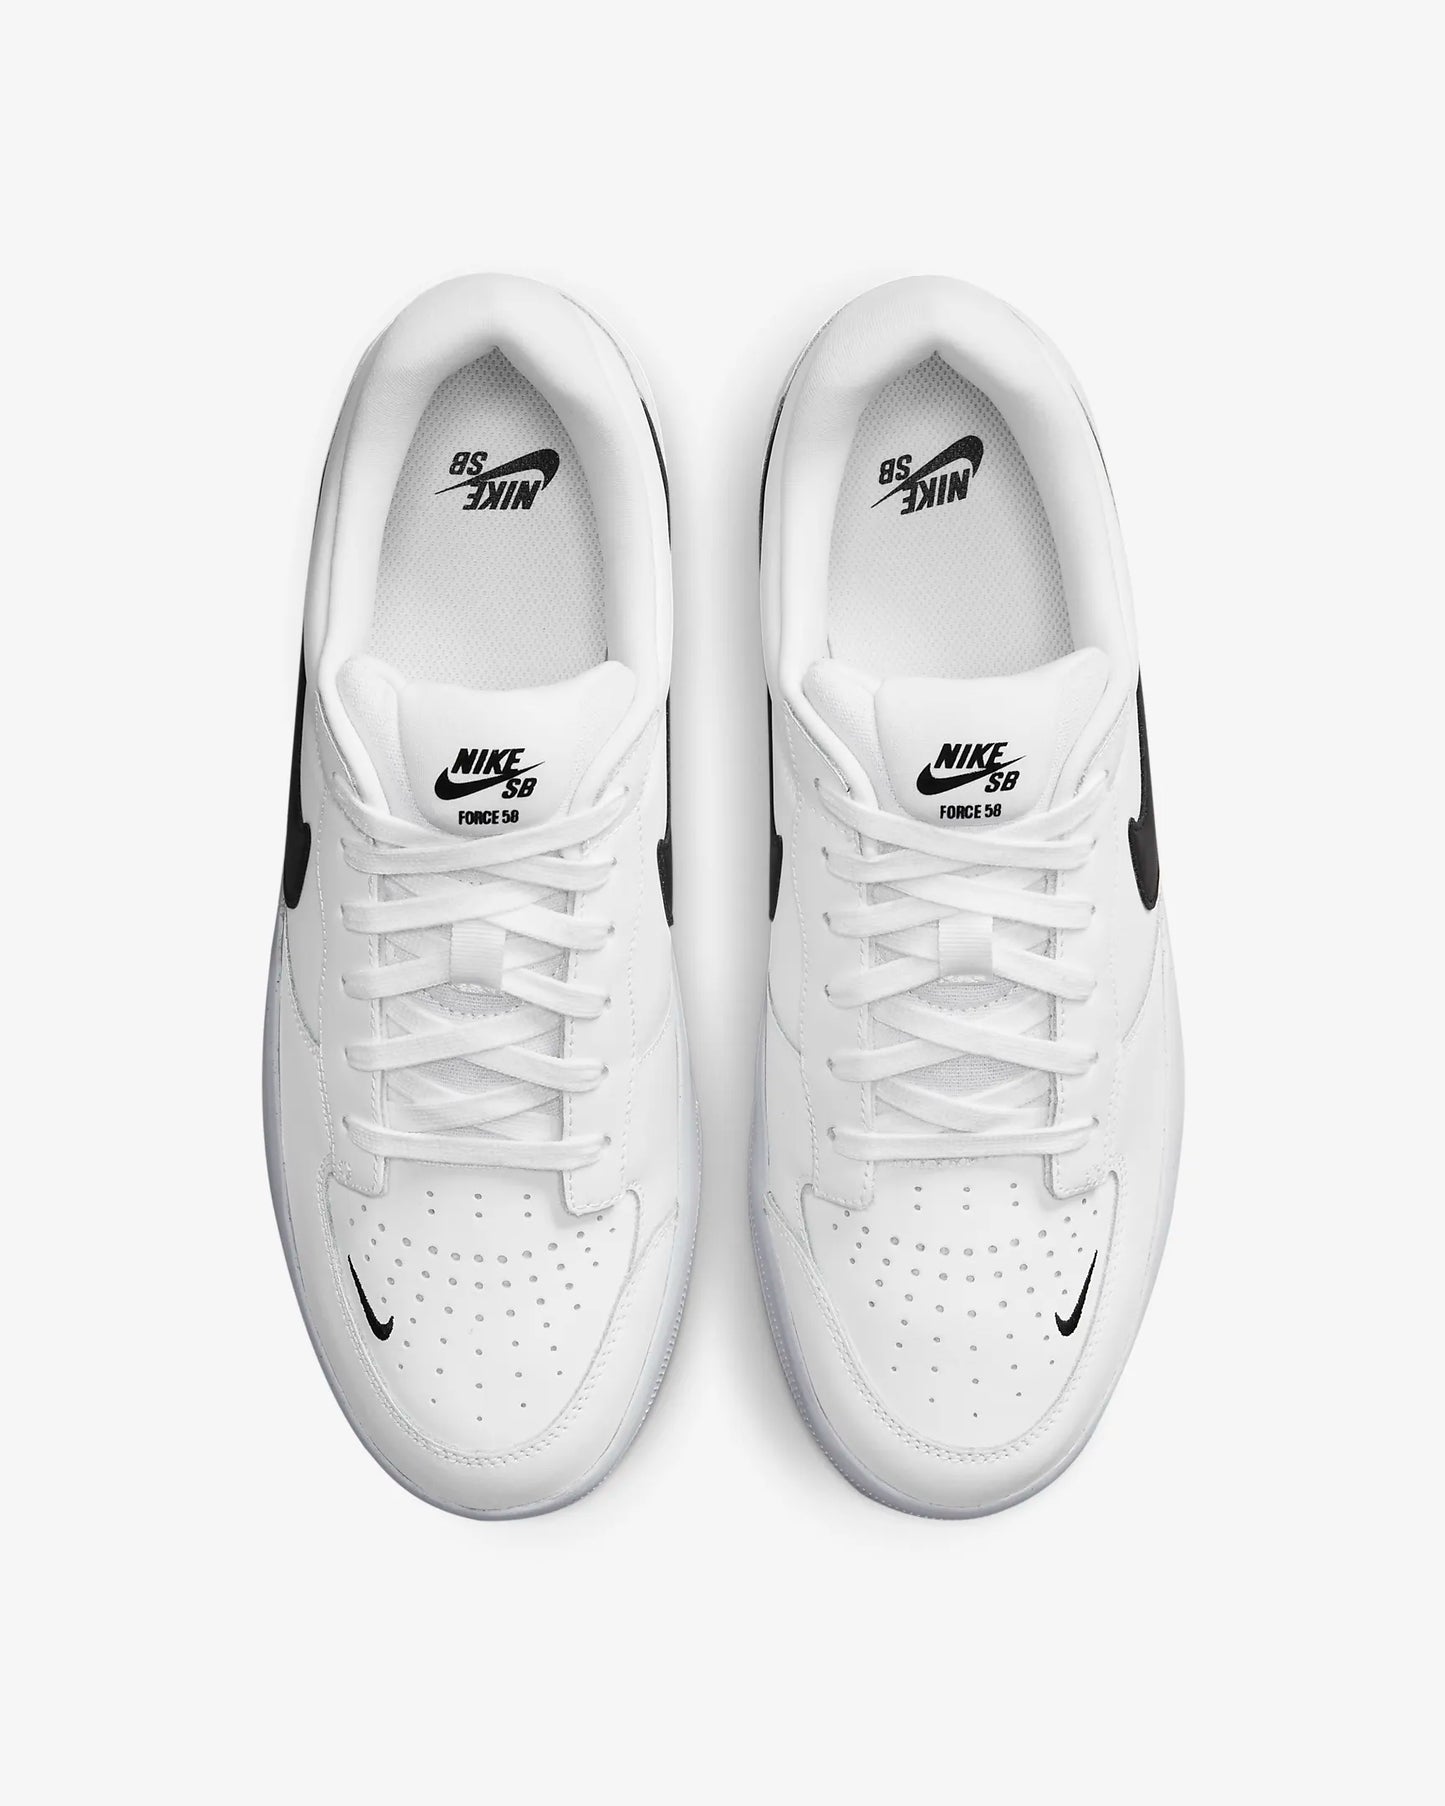 Nike SB Force 58 Premium Leather